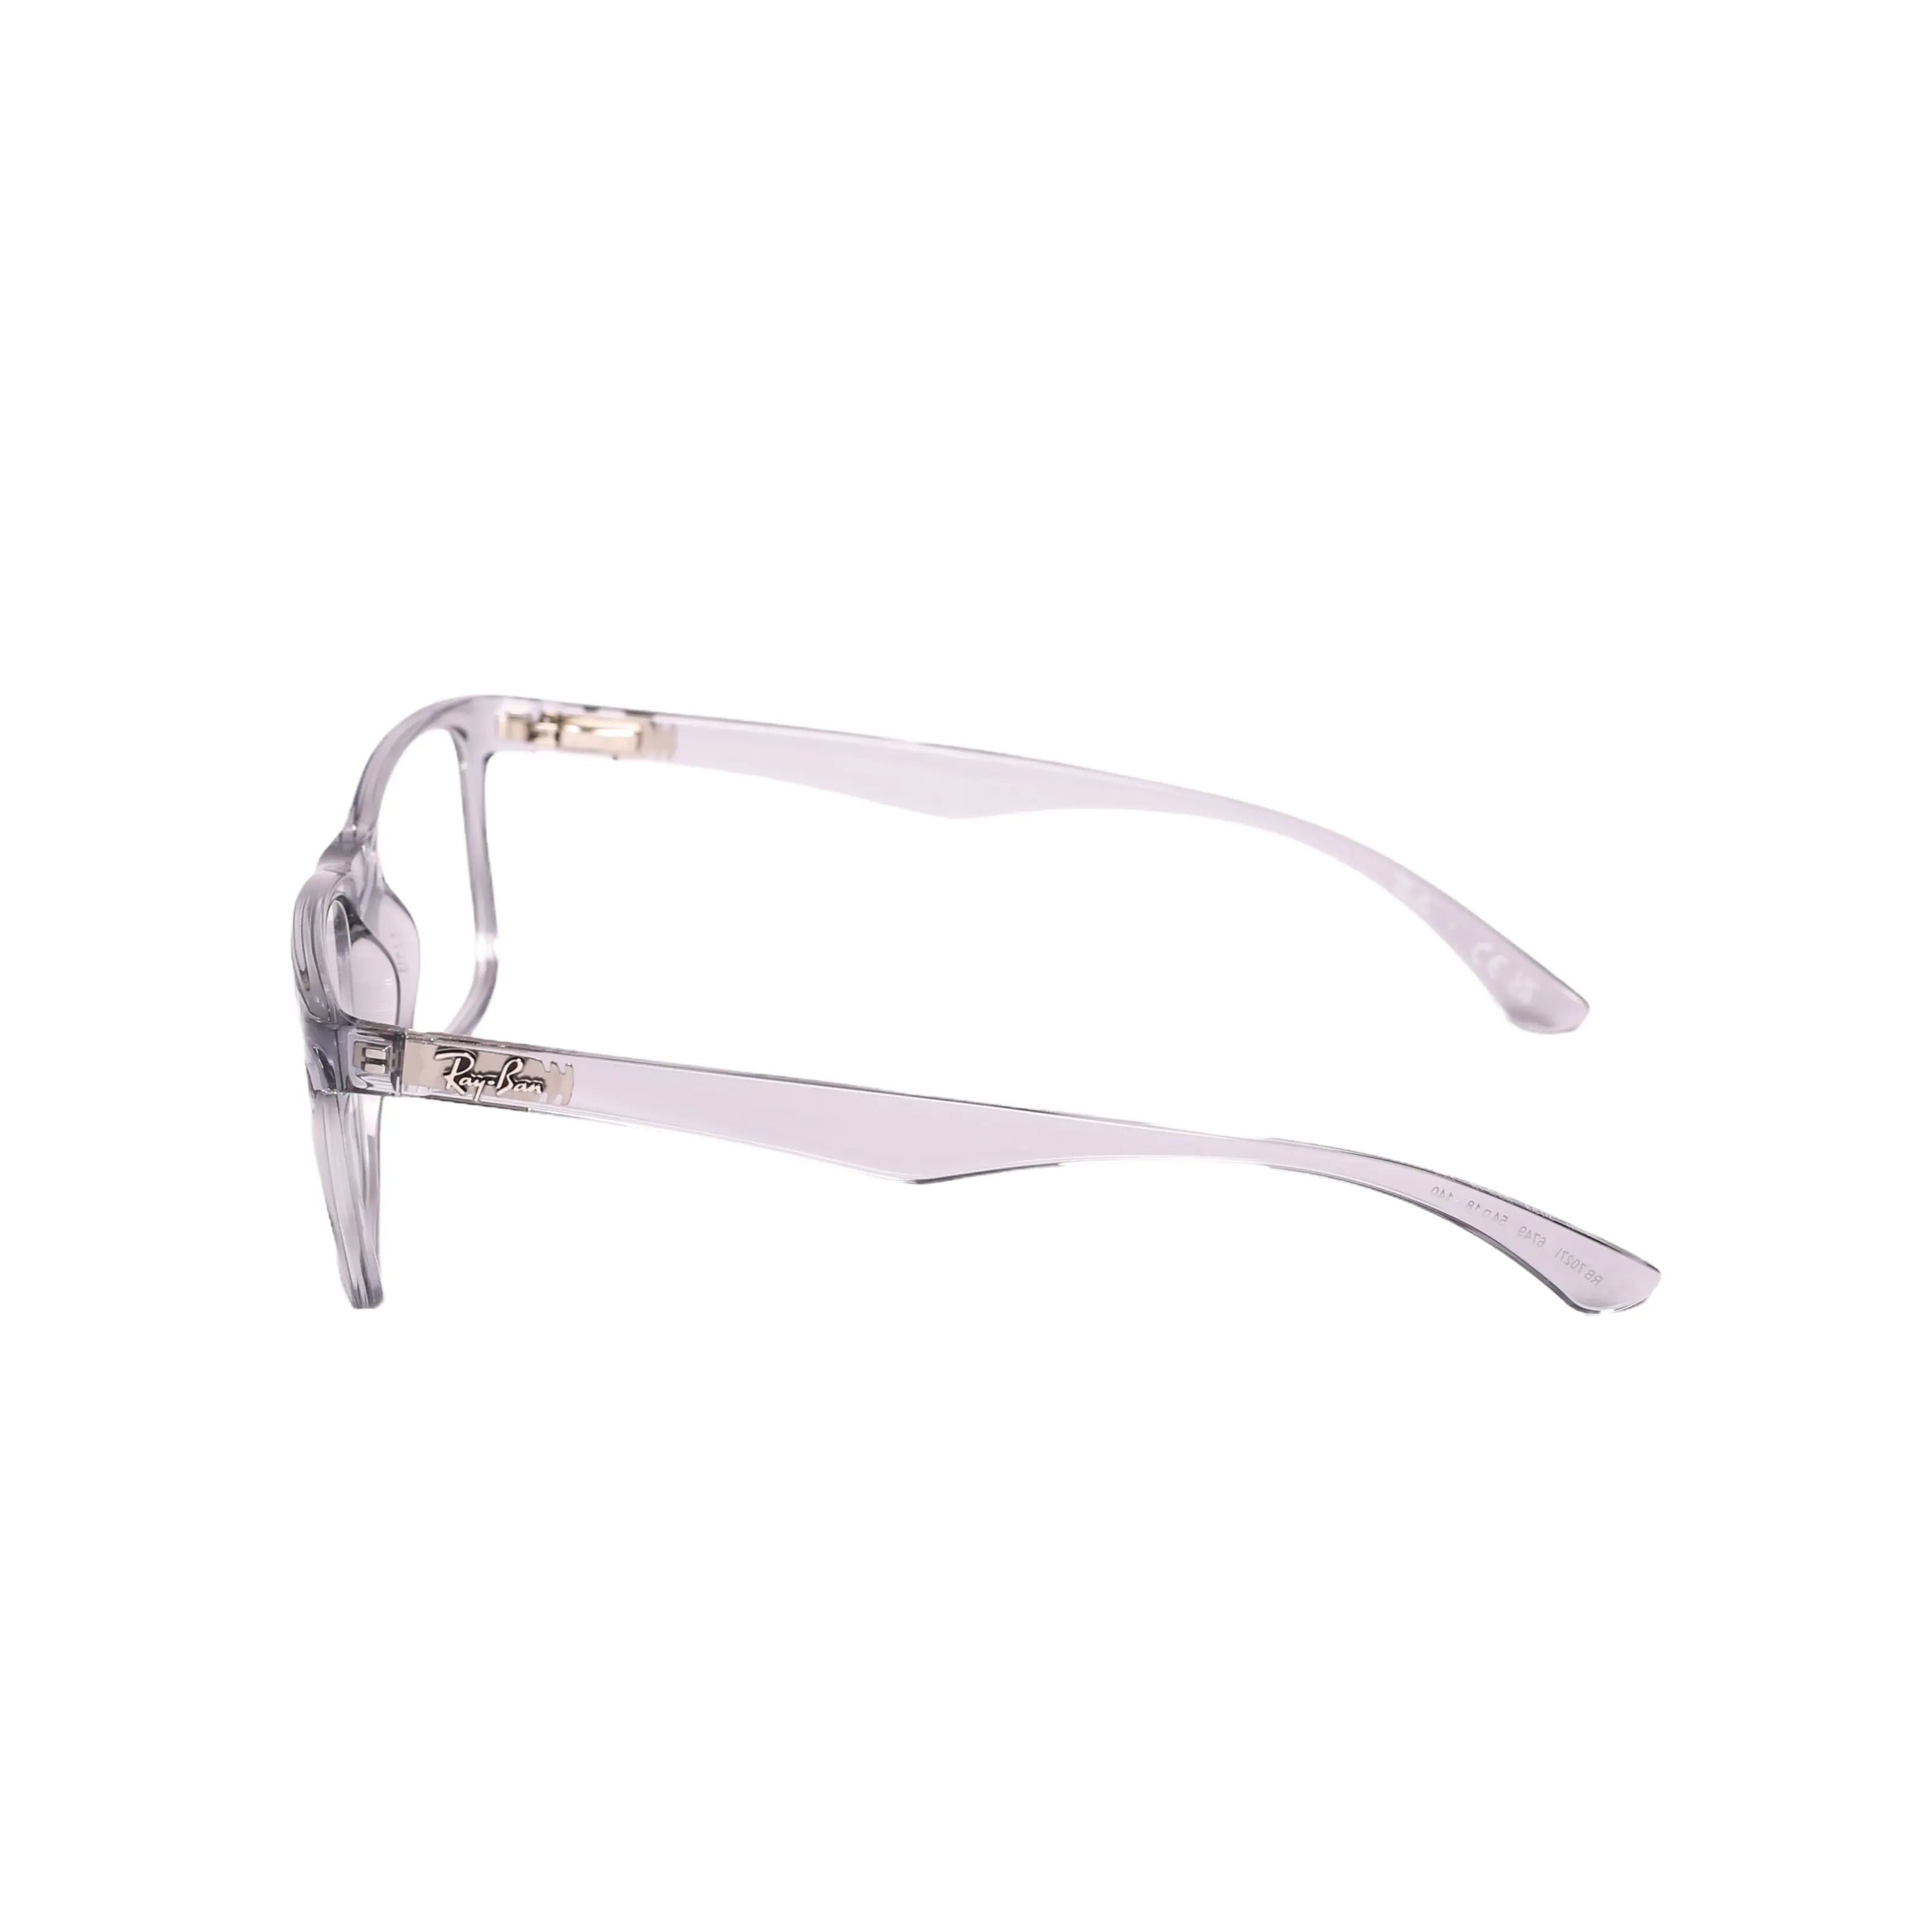 Rayban-RX7027I-54-6749 Eyeglasses - Premium Eyeglasses from Rayban - Just Rs. 6190! Shop now at Laxmi Opticians